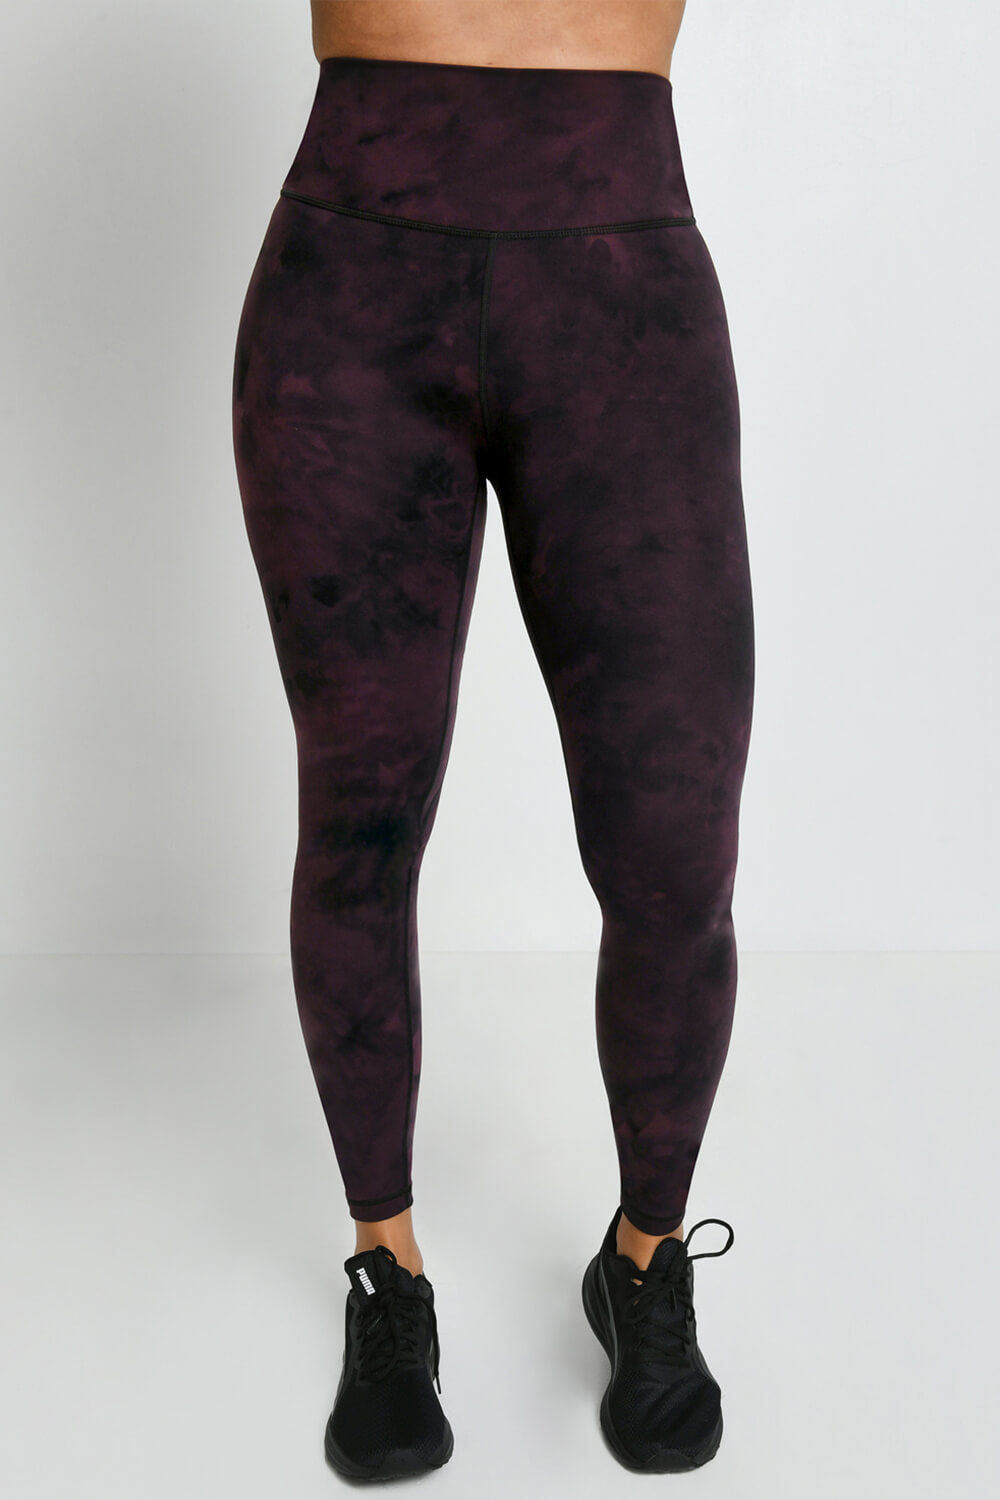 High Waist Black Legging - Marbled Purple